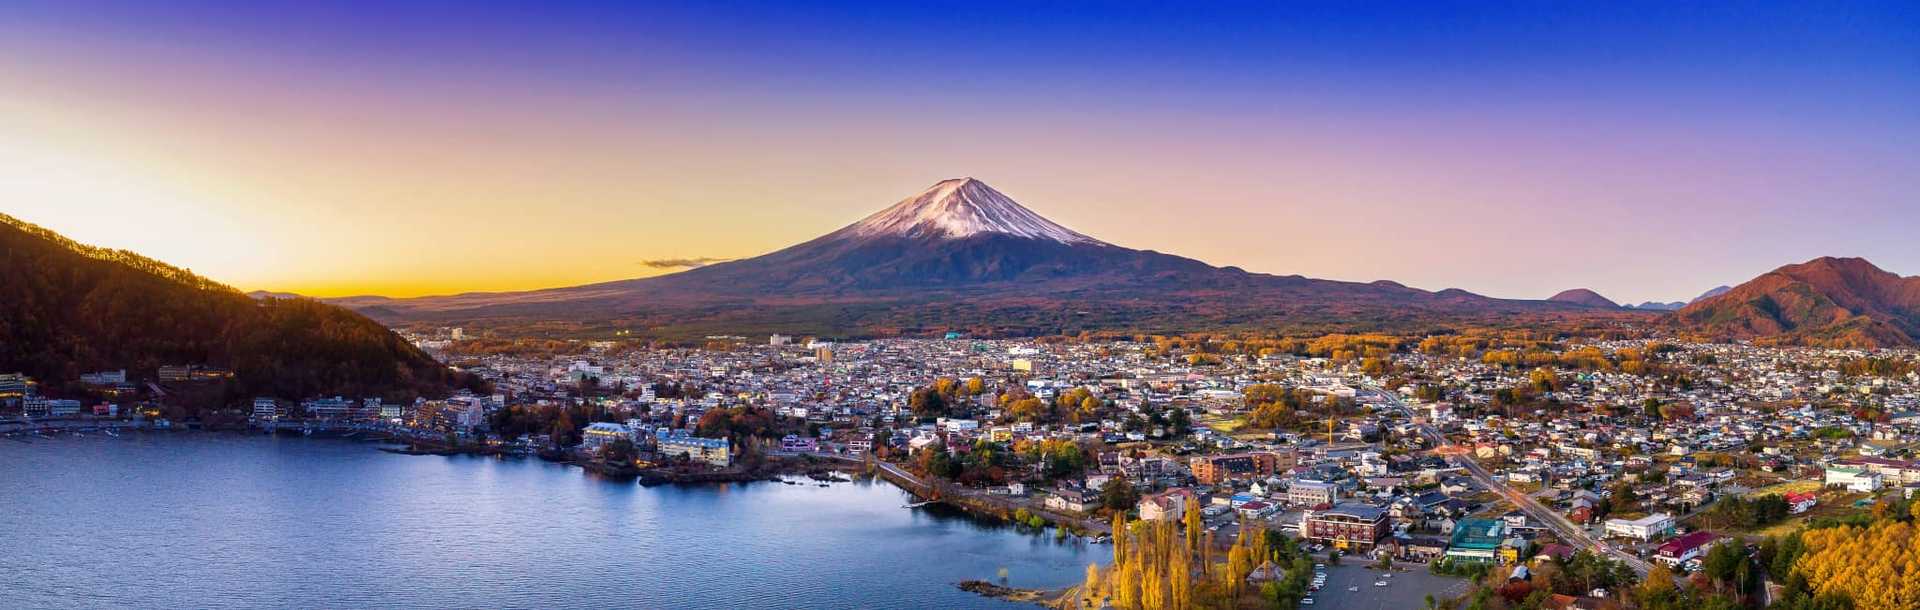 Japan Mount Fuji over Lake Kawaguchiko and town